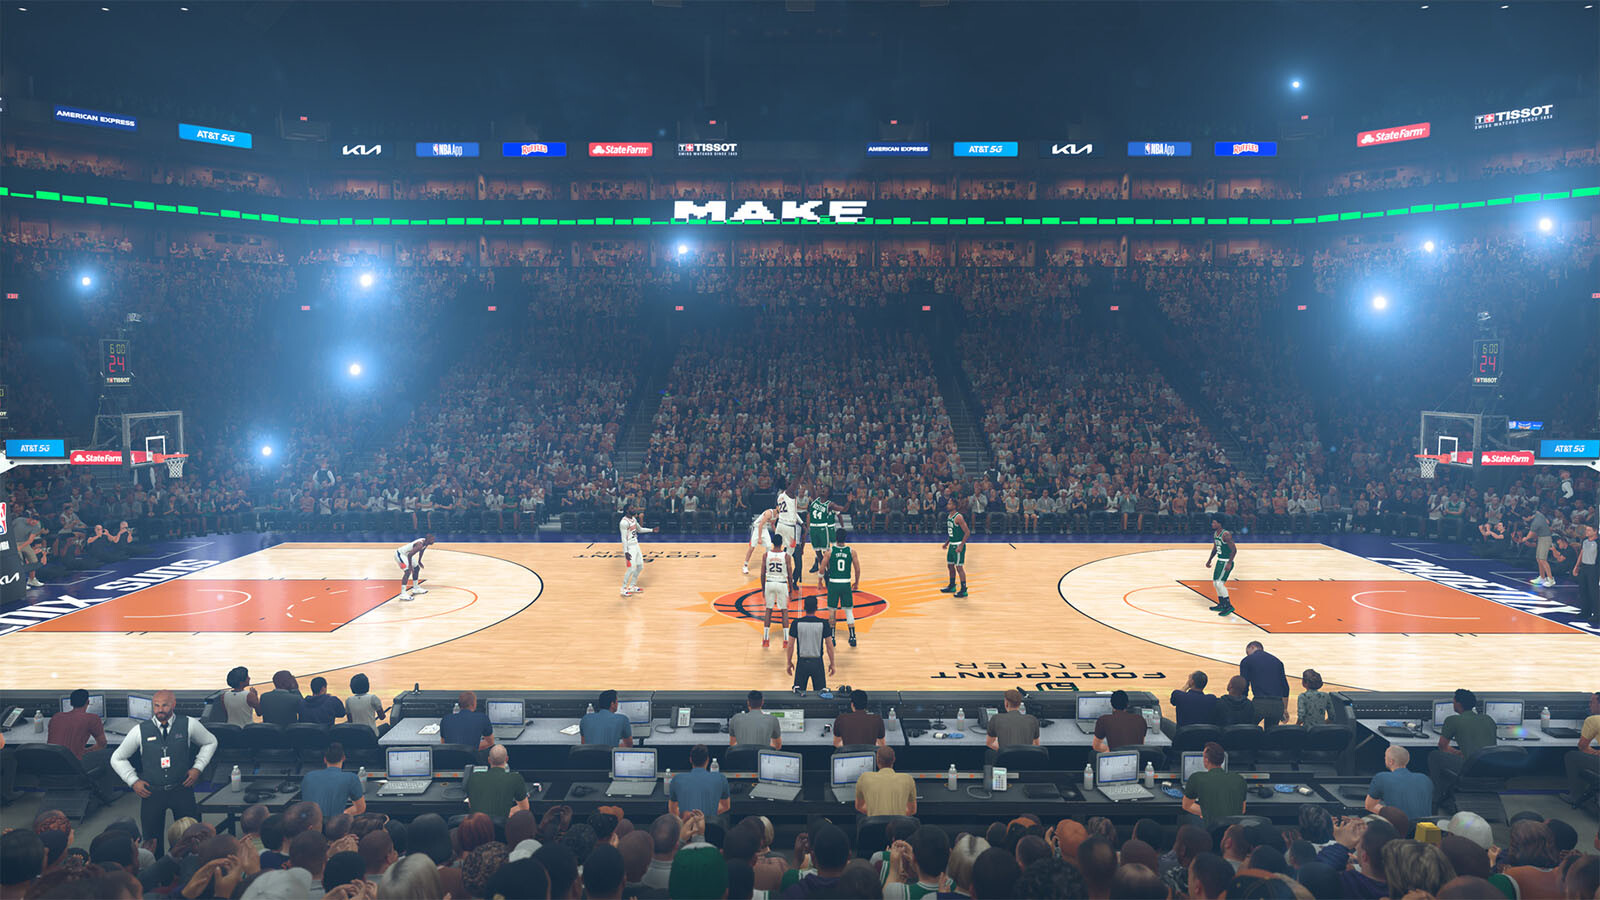 Buy NBA 2K24  Kobe Bryant Edition (PC) - Steam Key - GLOBAL